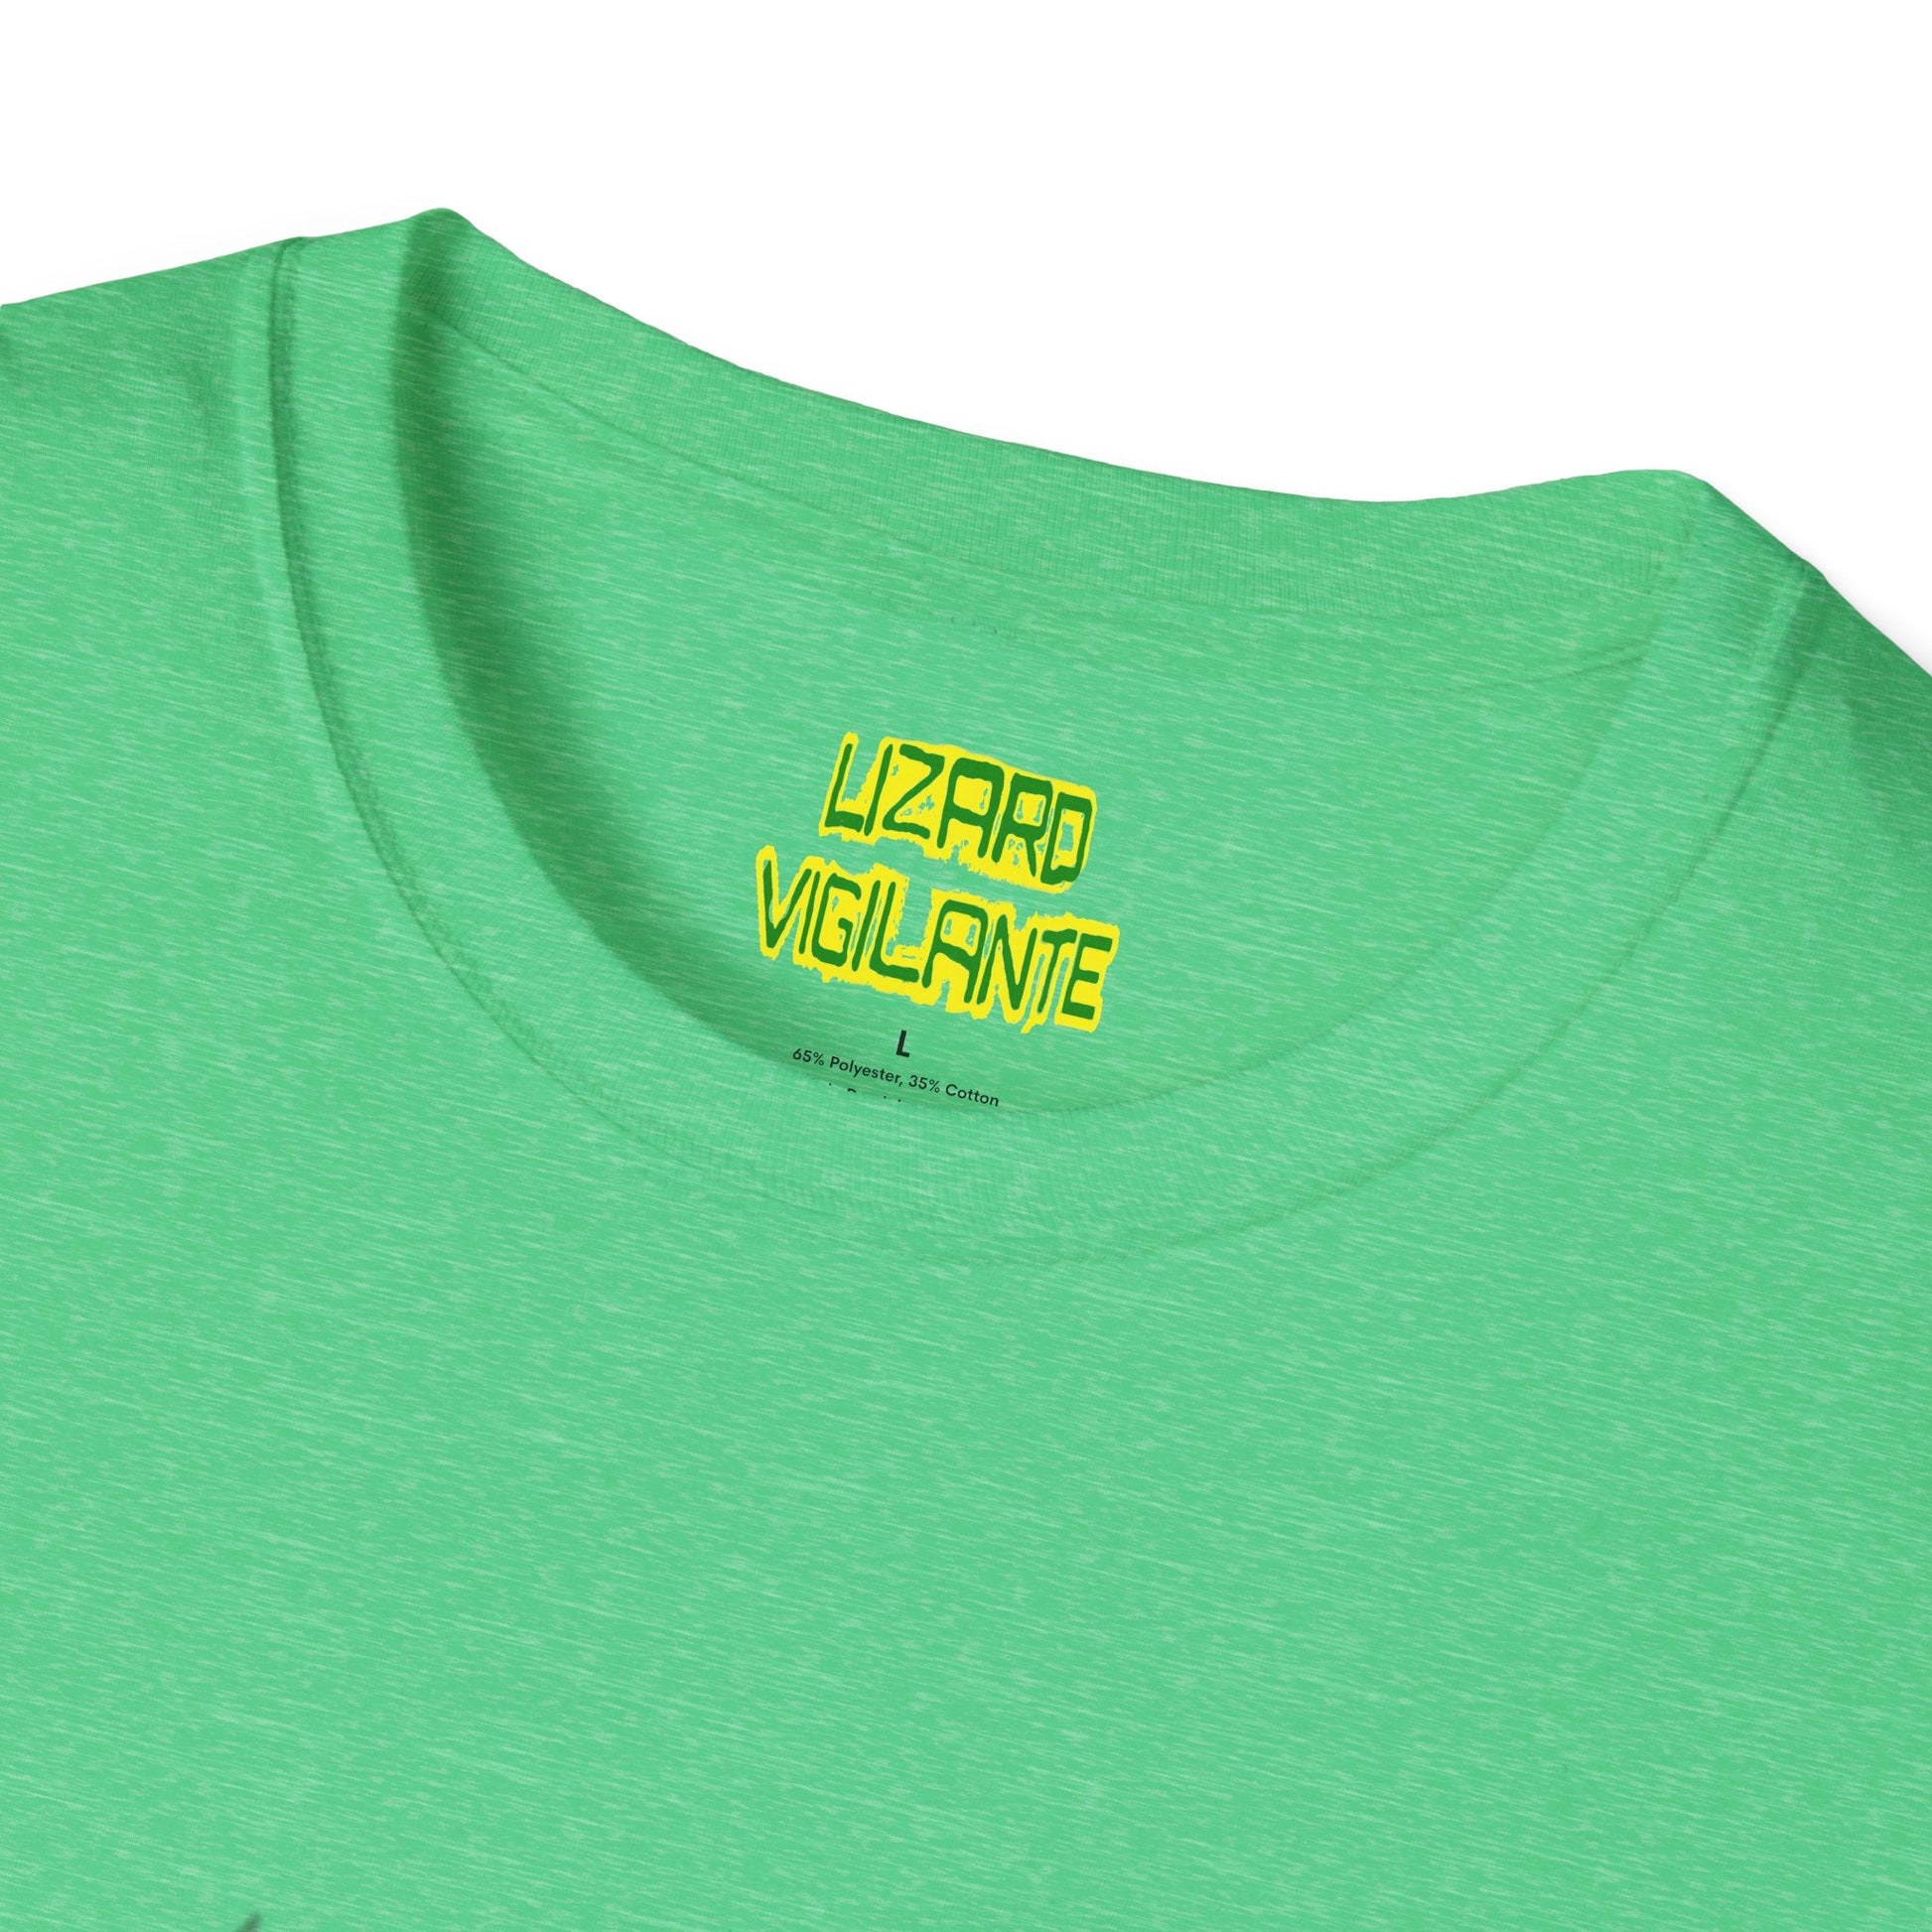 PUNK ROCK Unisex Softstyle T-Shirt - Lizard Vigilante